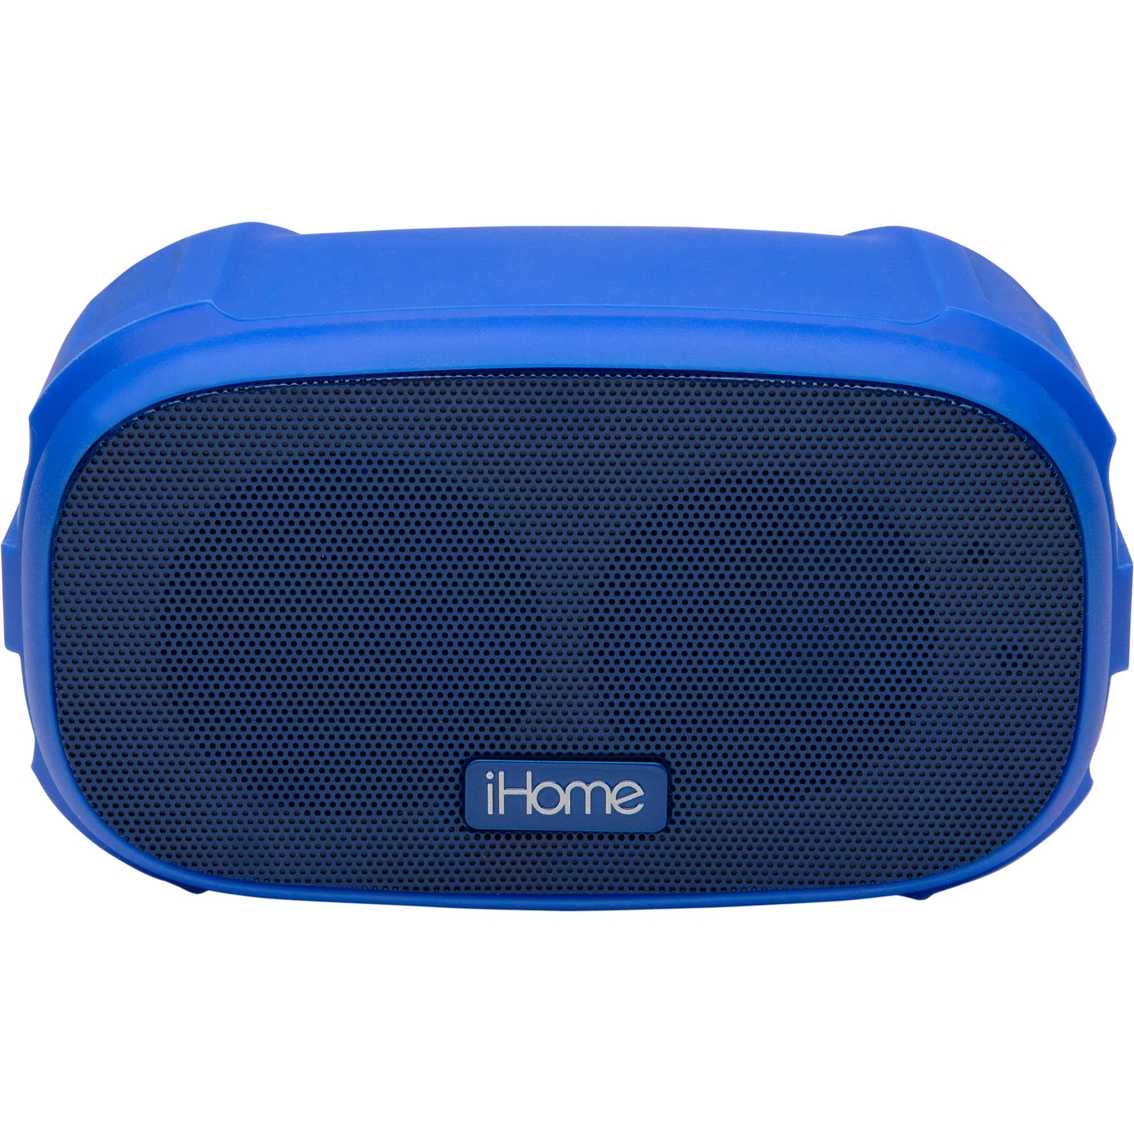 iHome PlayTough X Water/Shock Resistant Bluetooth Speaker - Image 2 of 3